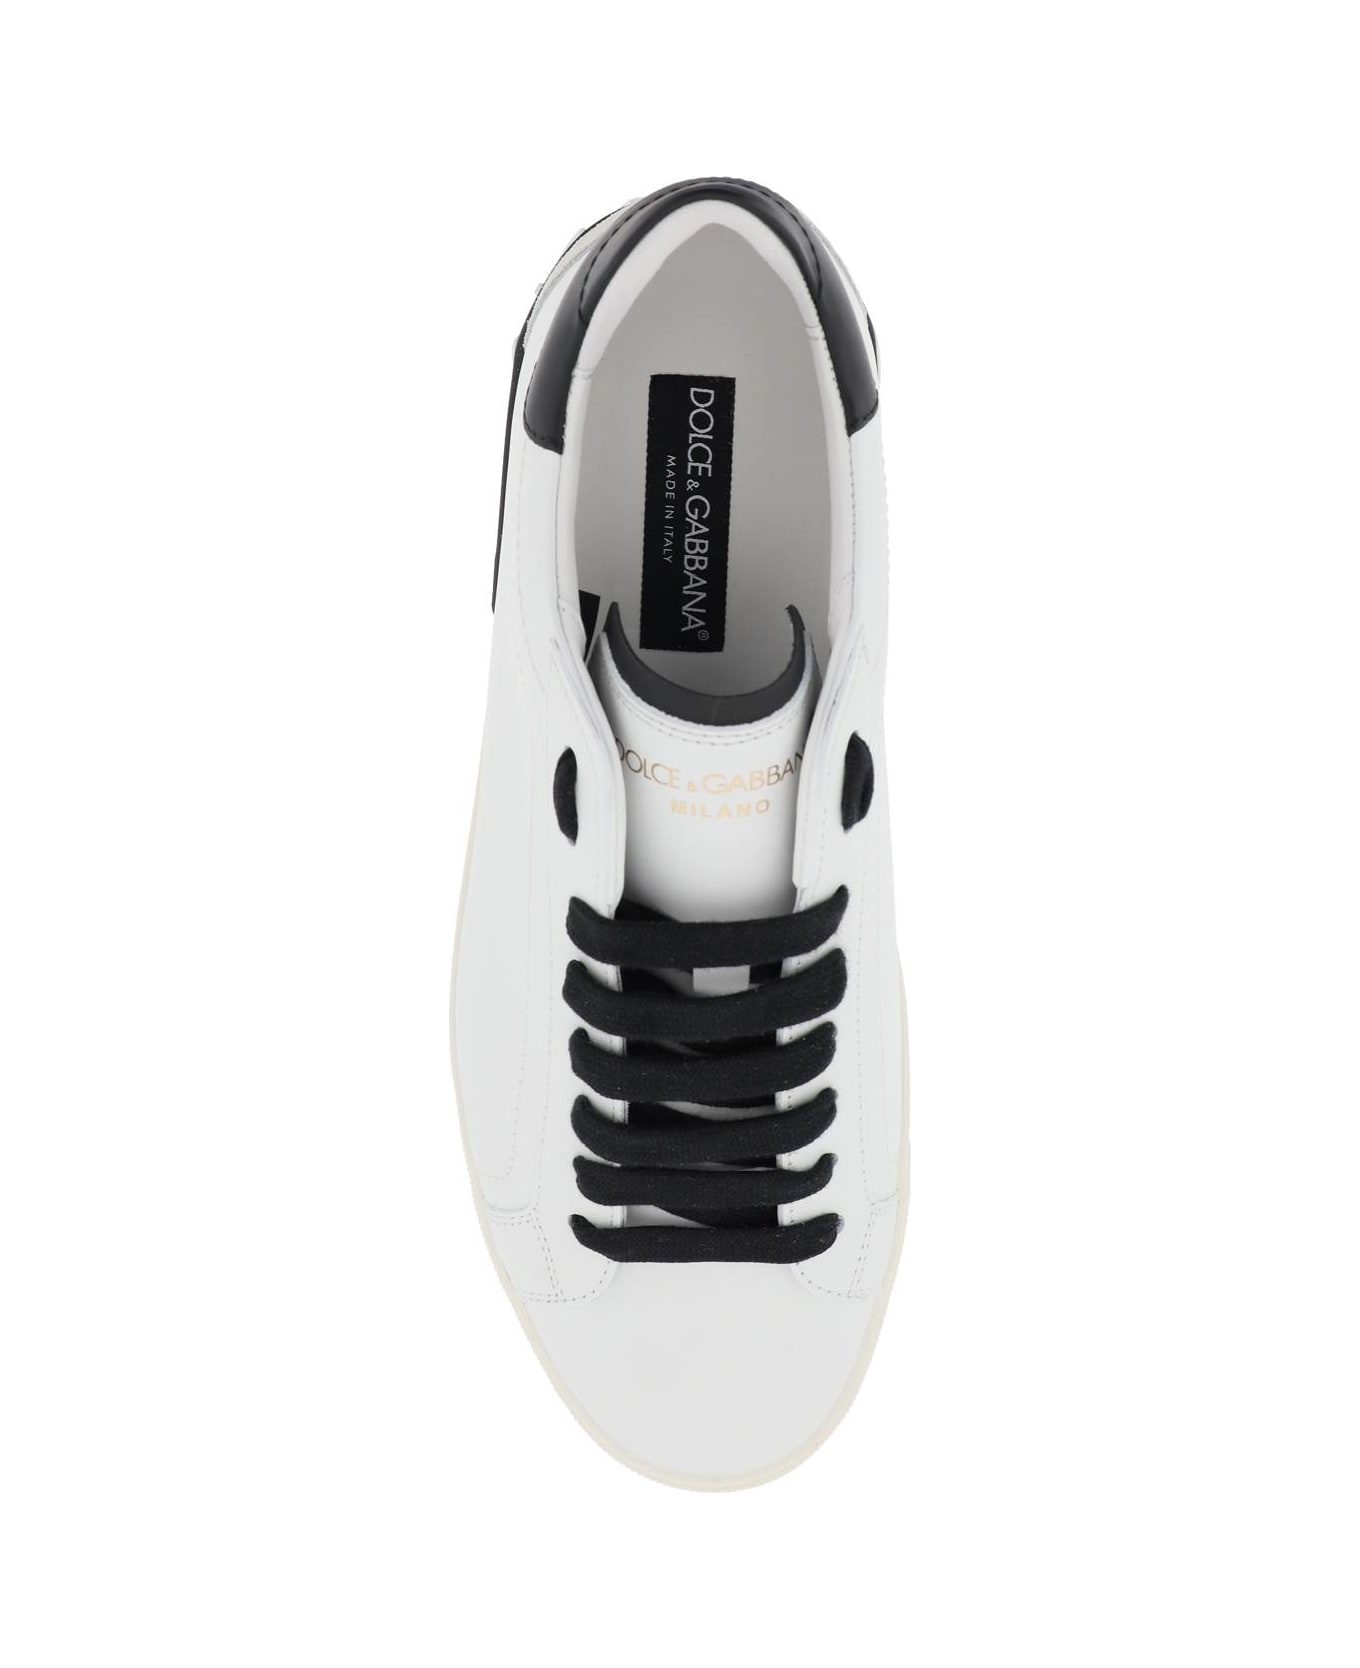 Asics Mens GEL-Game 8 Tennis Shoes Portofino Nappa Leather Sneakers - WHITE/BLACK